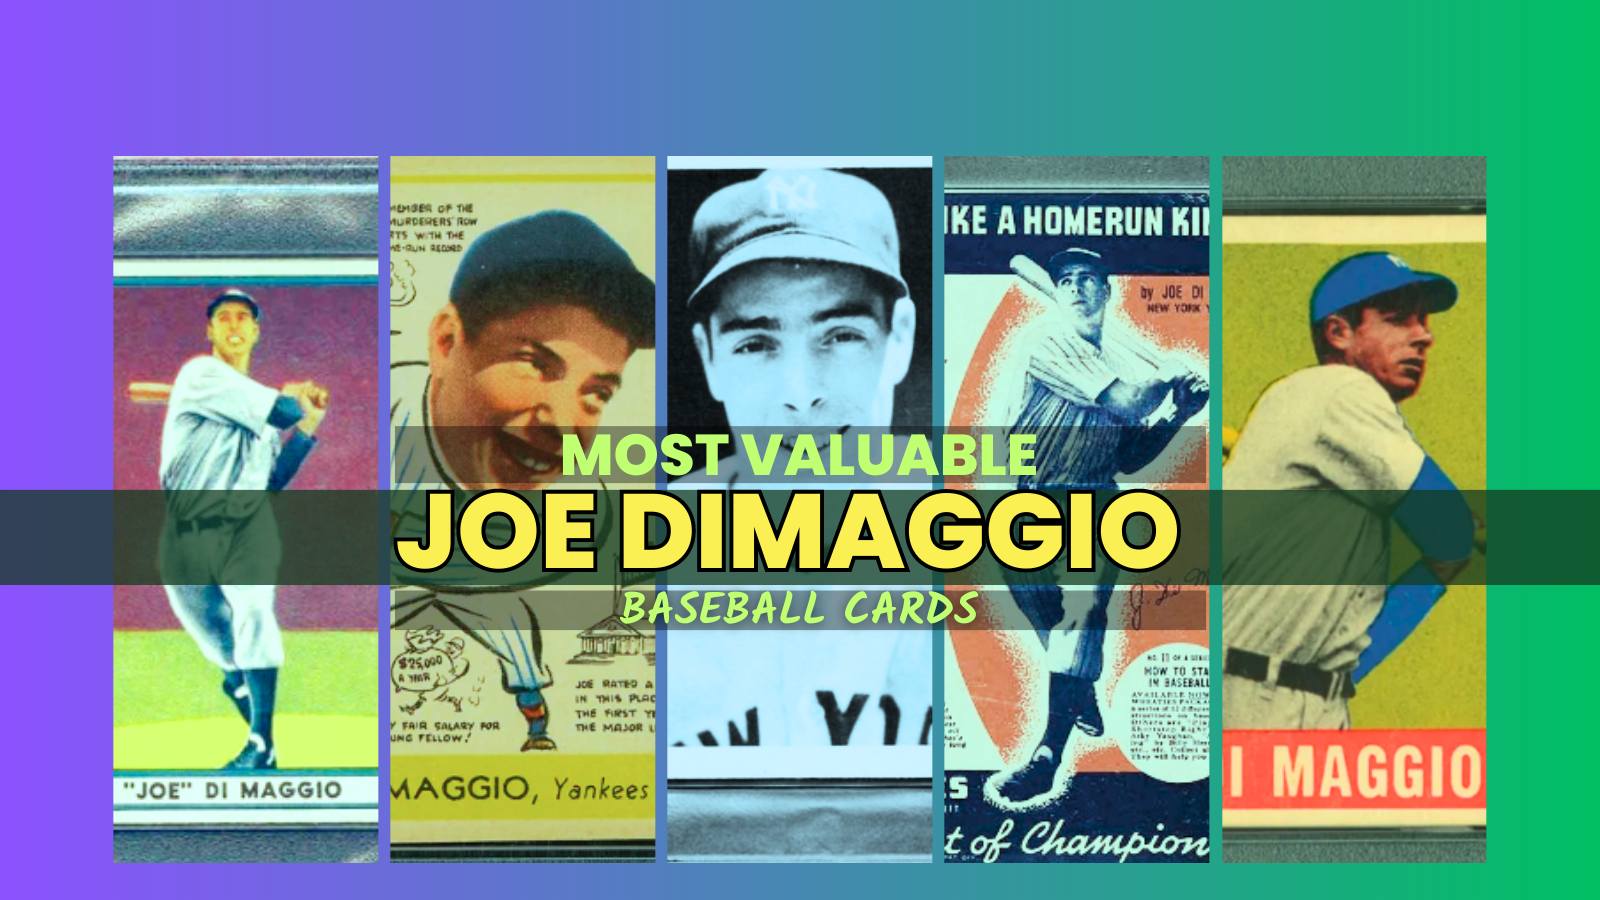 1938 Joe DiMaggio Yankees Baseball Card 11 x 14 Photo Print 